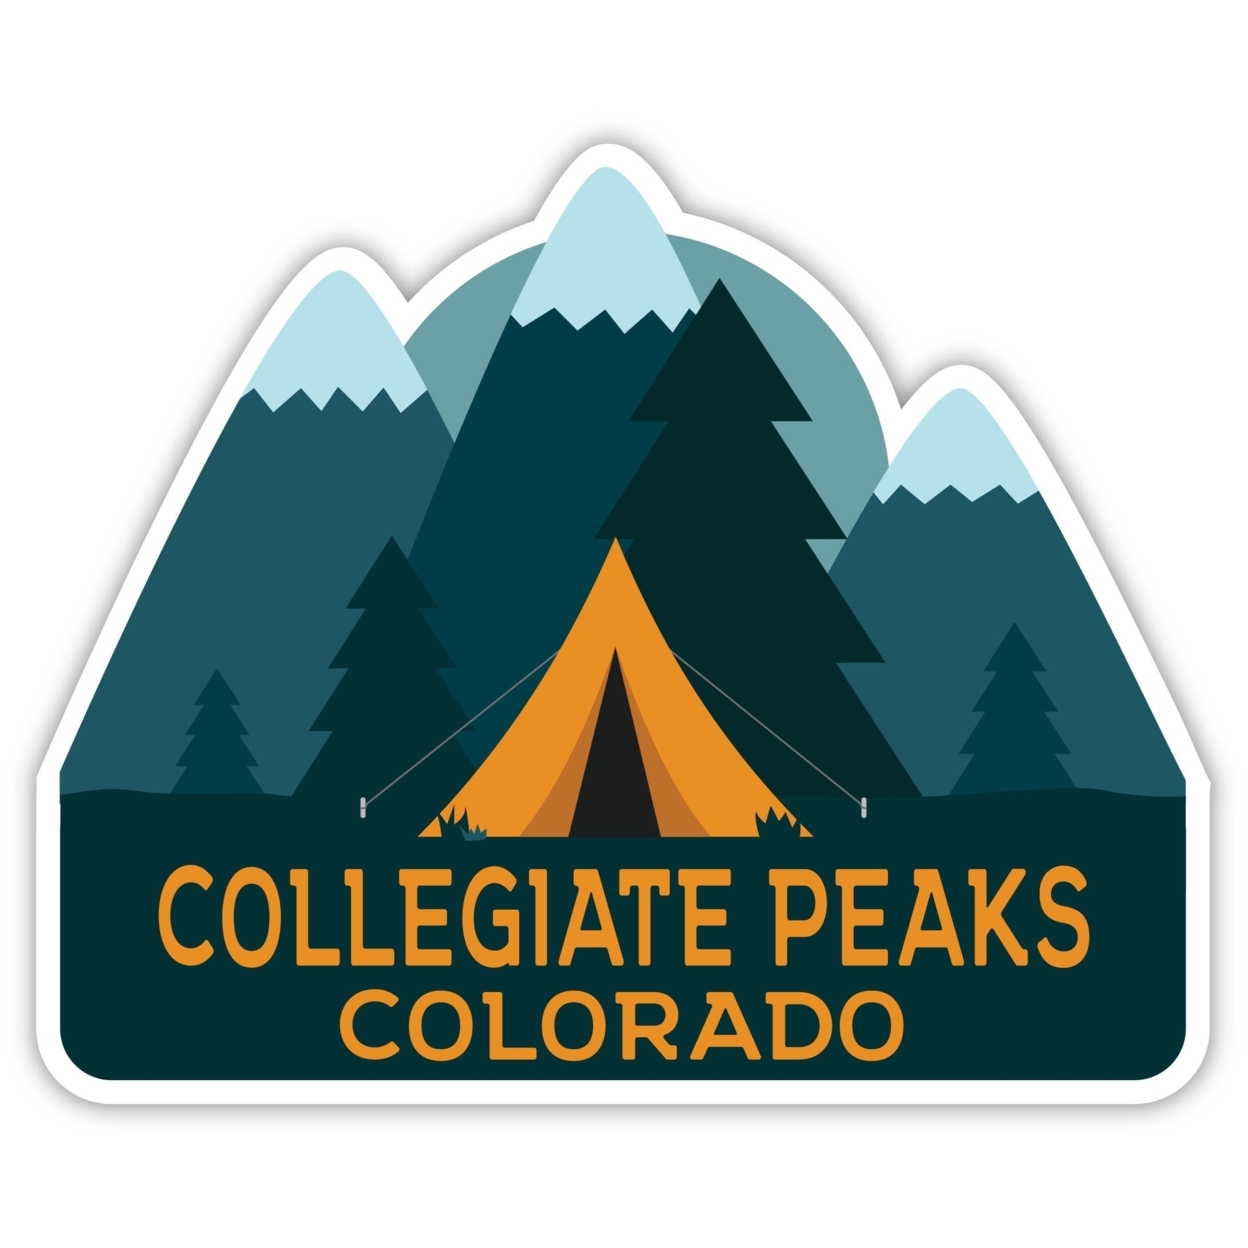 Collegiate Peaks Colorado Souvenir Decorative Stickers (Choose Theme And Size) - 4-Pack, 4-Inch, Tent